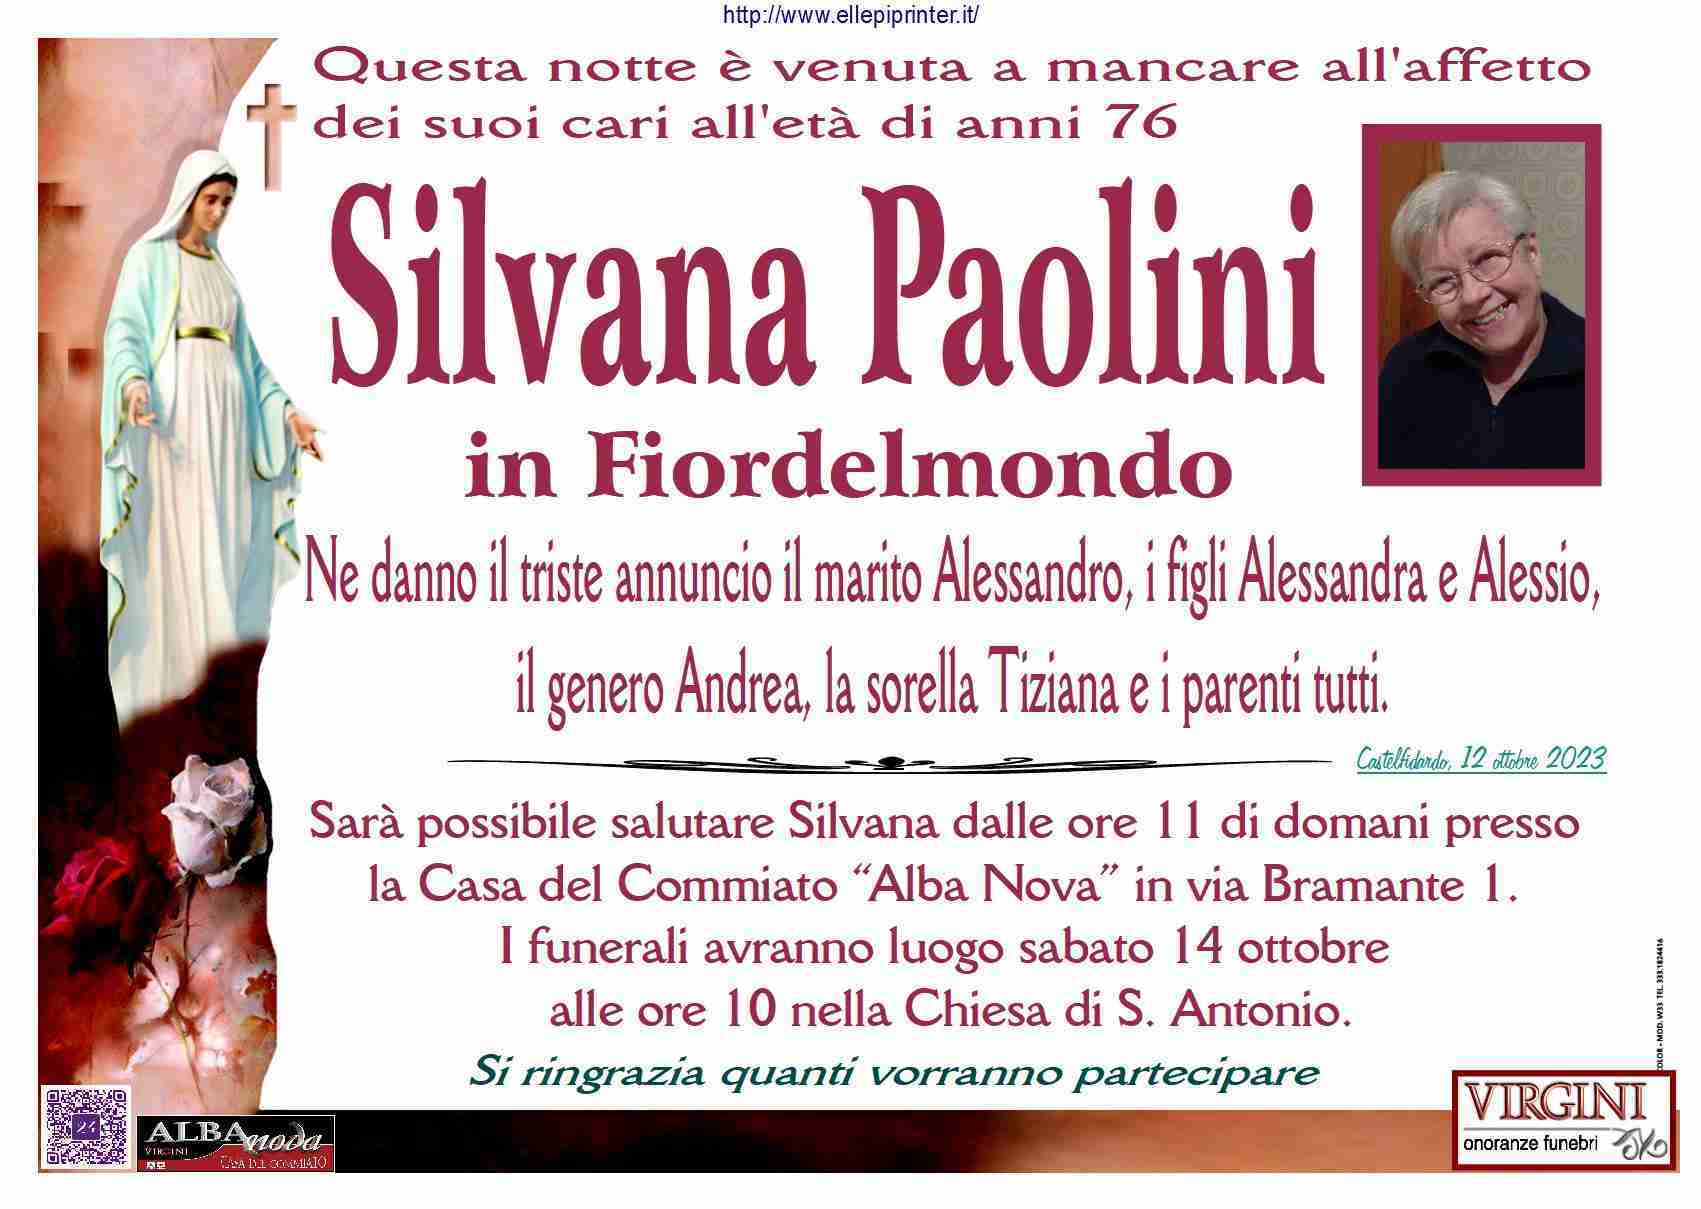 Silvana Paolini